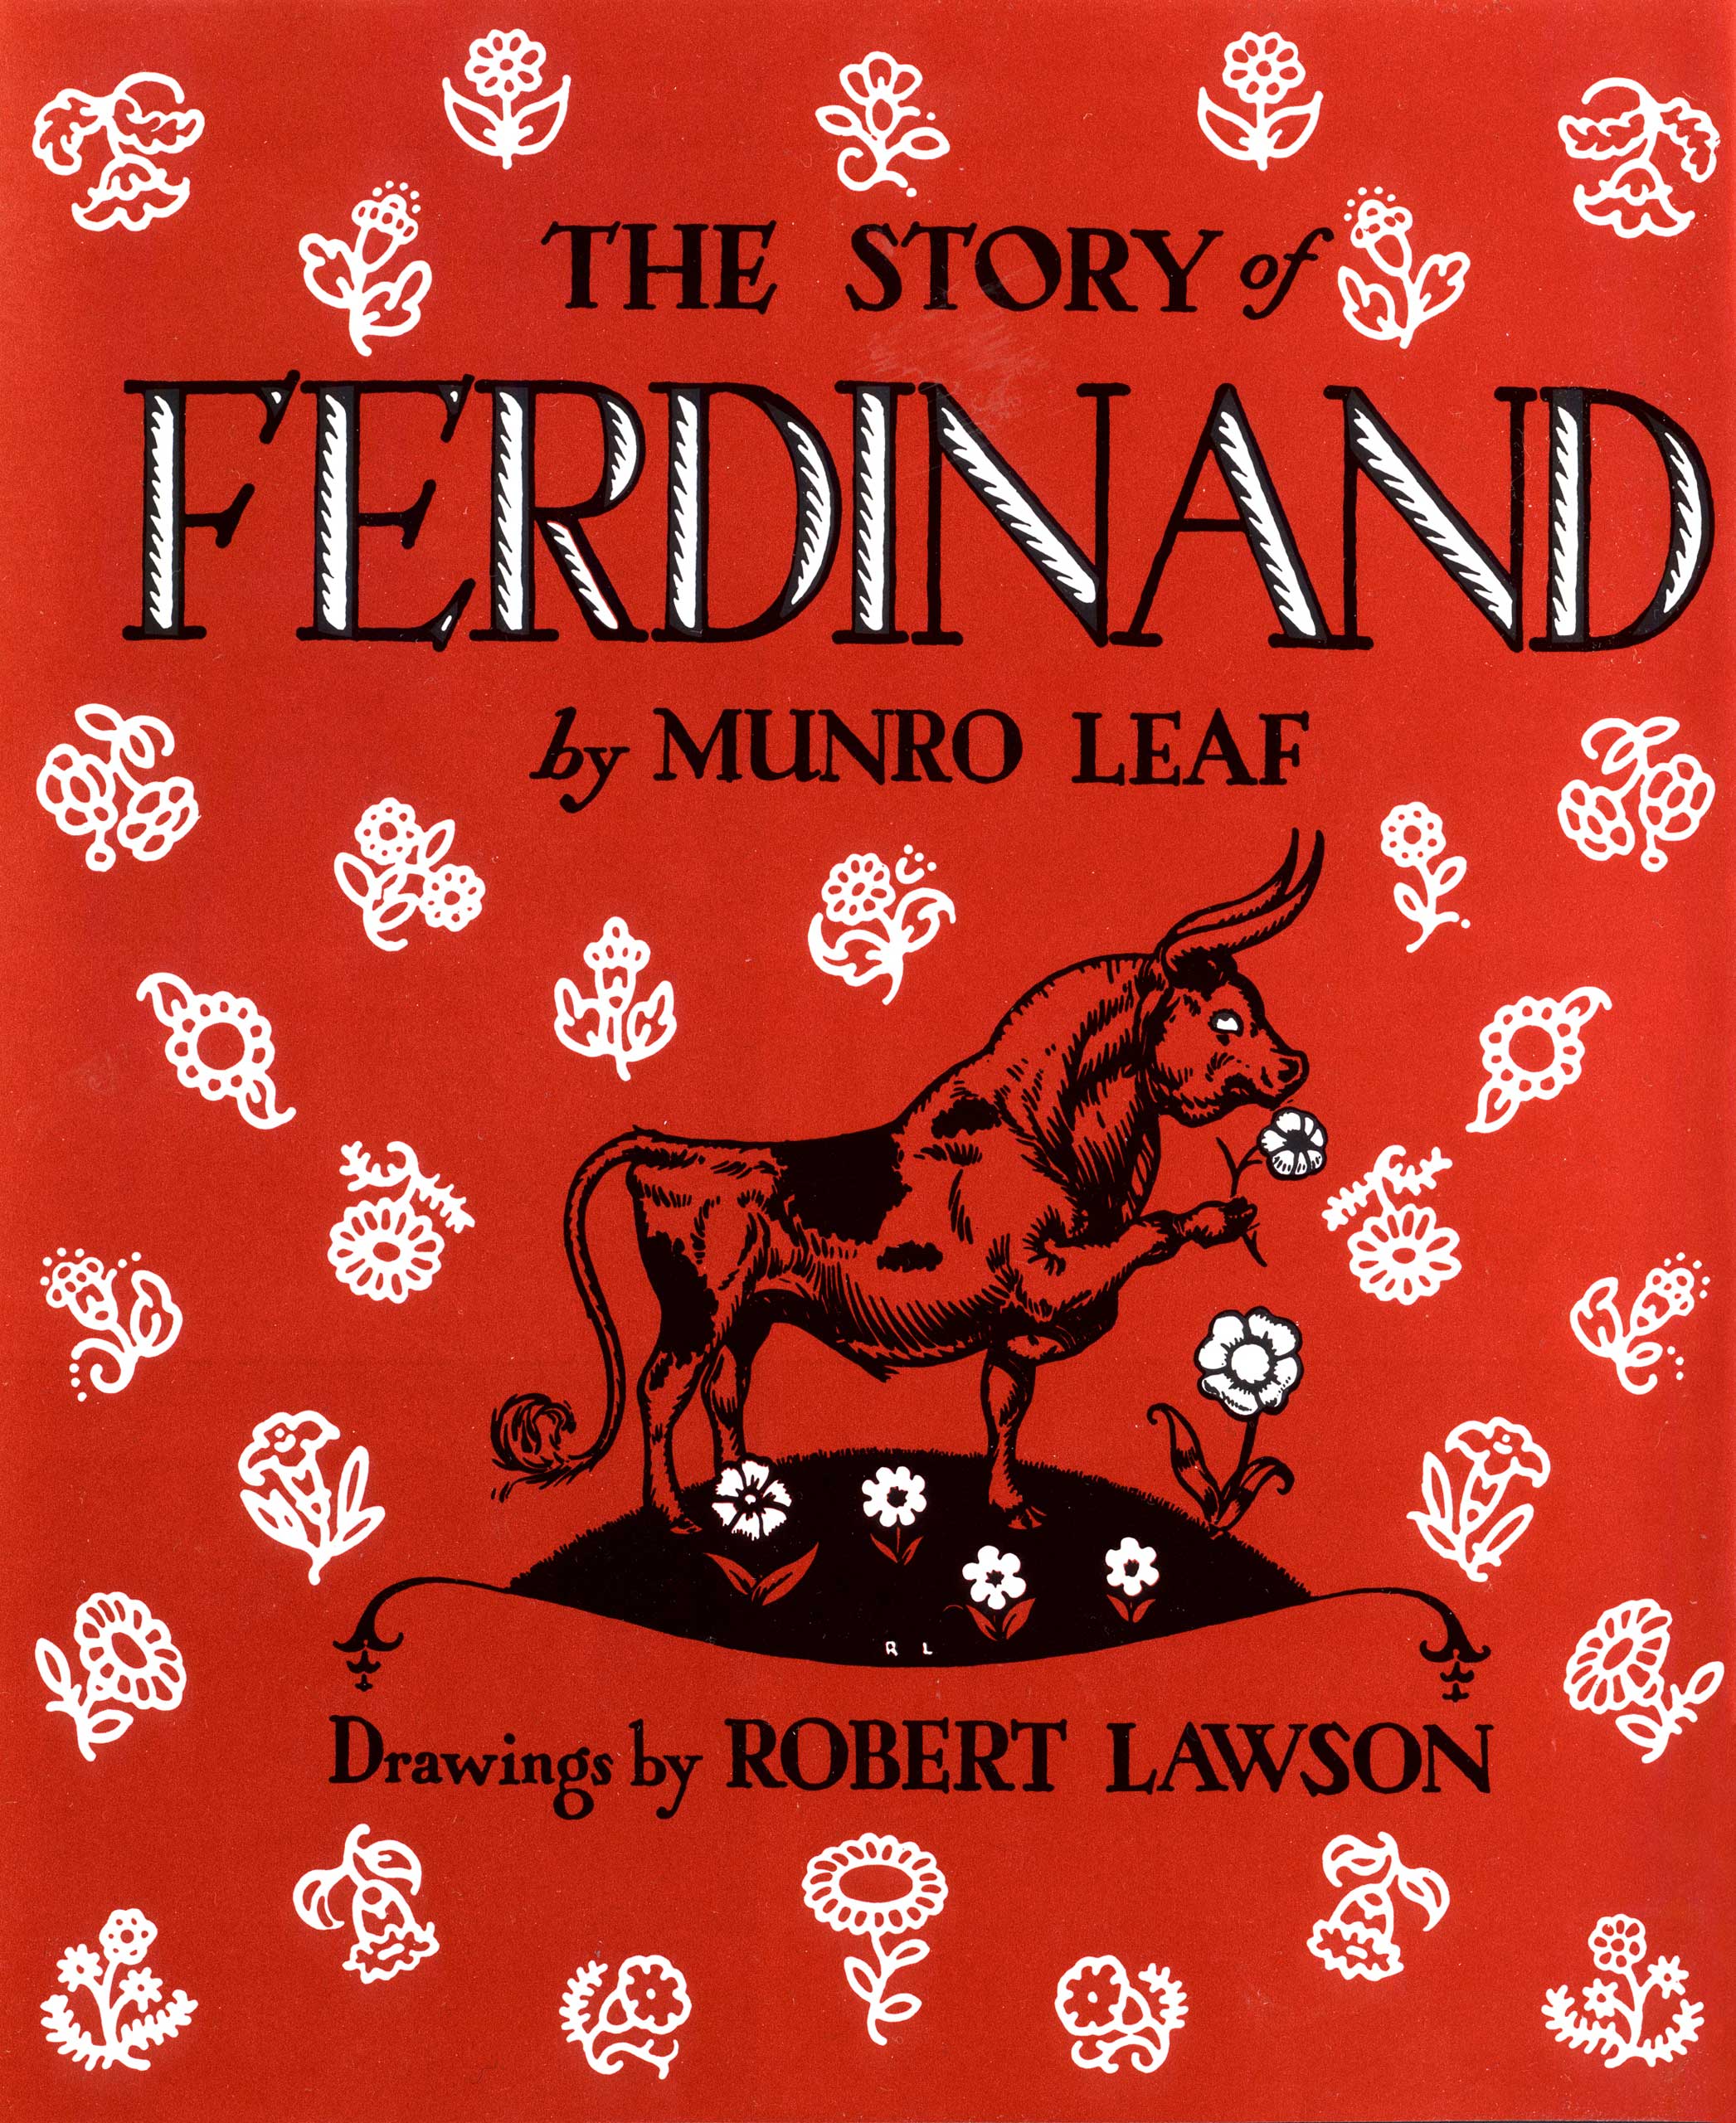 Best Children's Books: The Story of Ferdinand